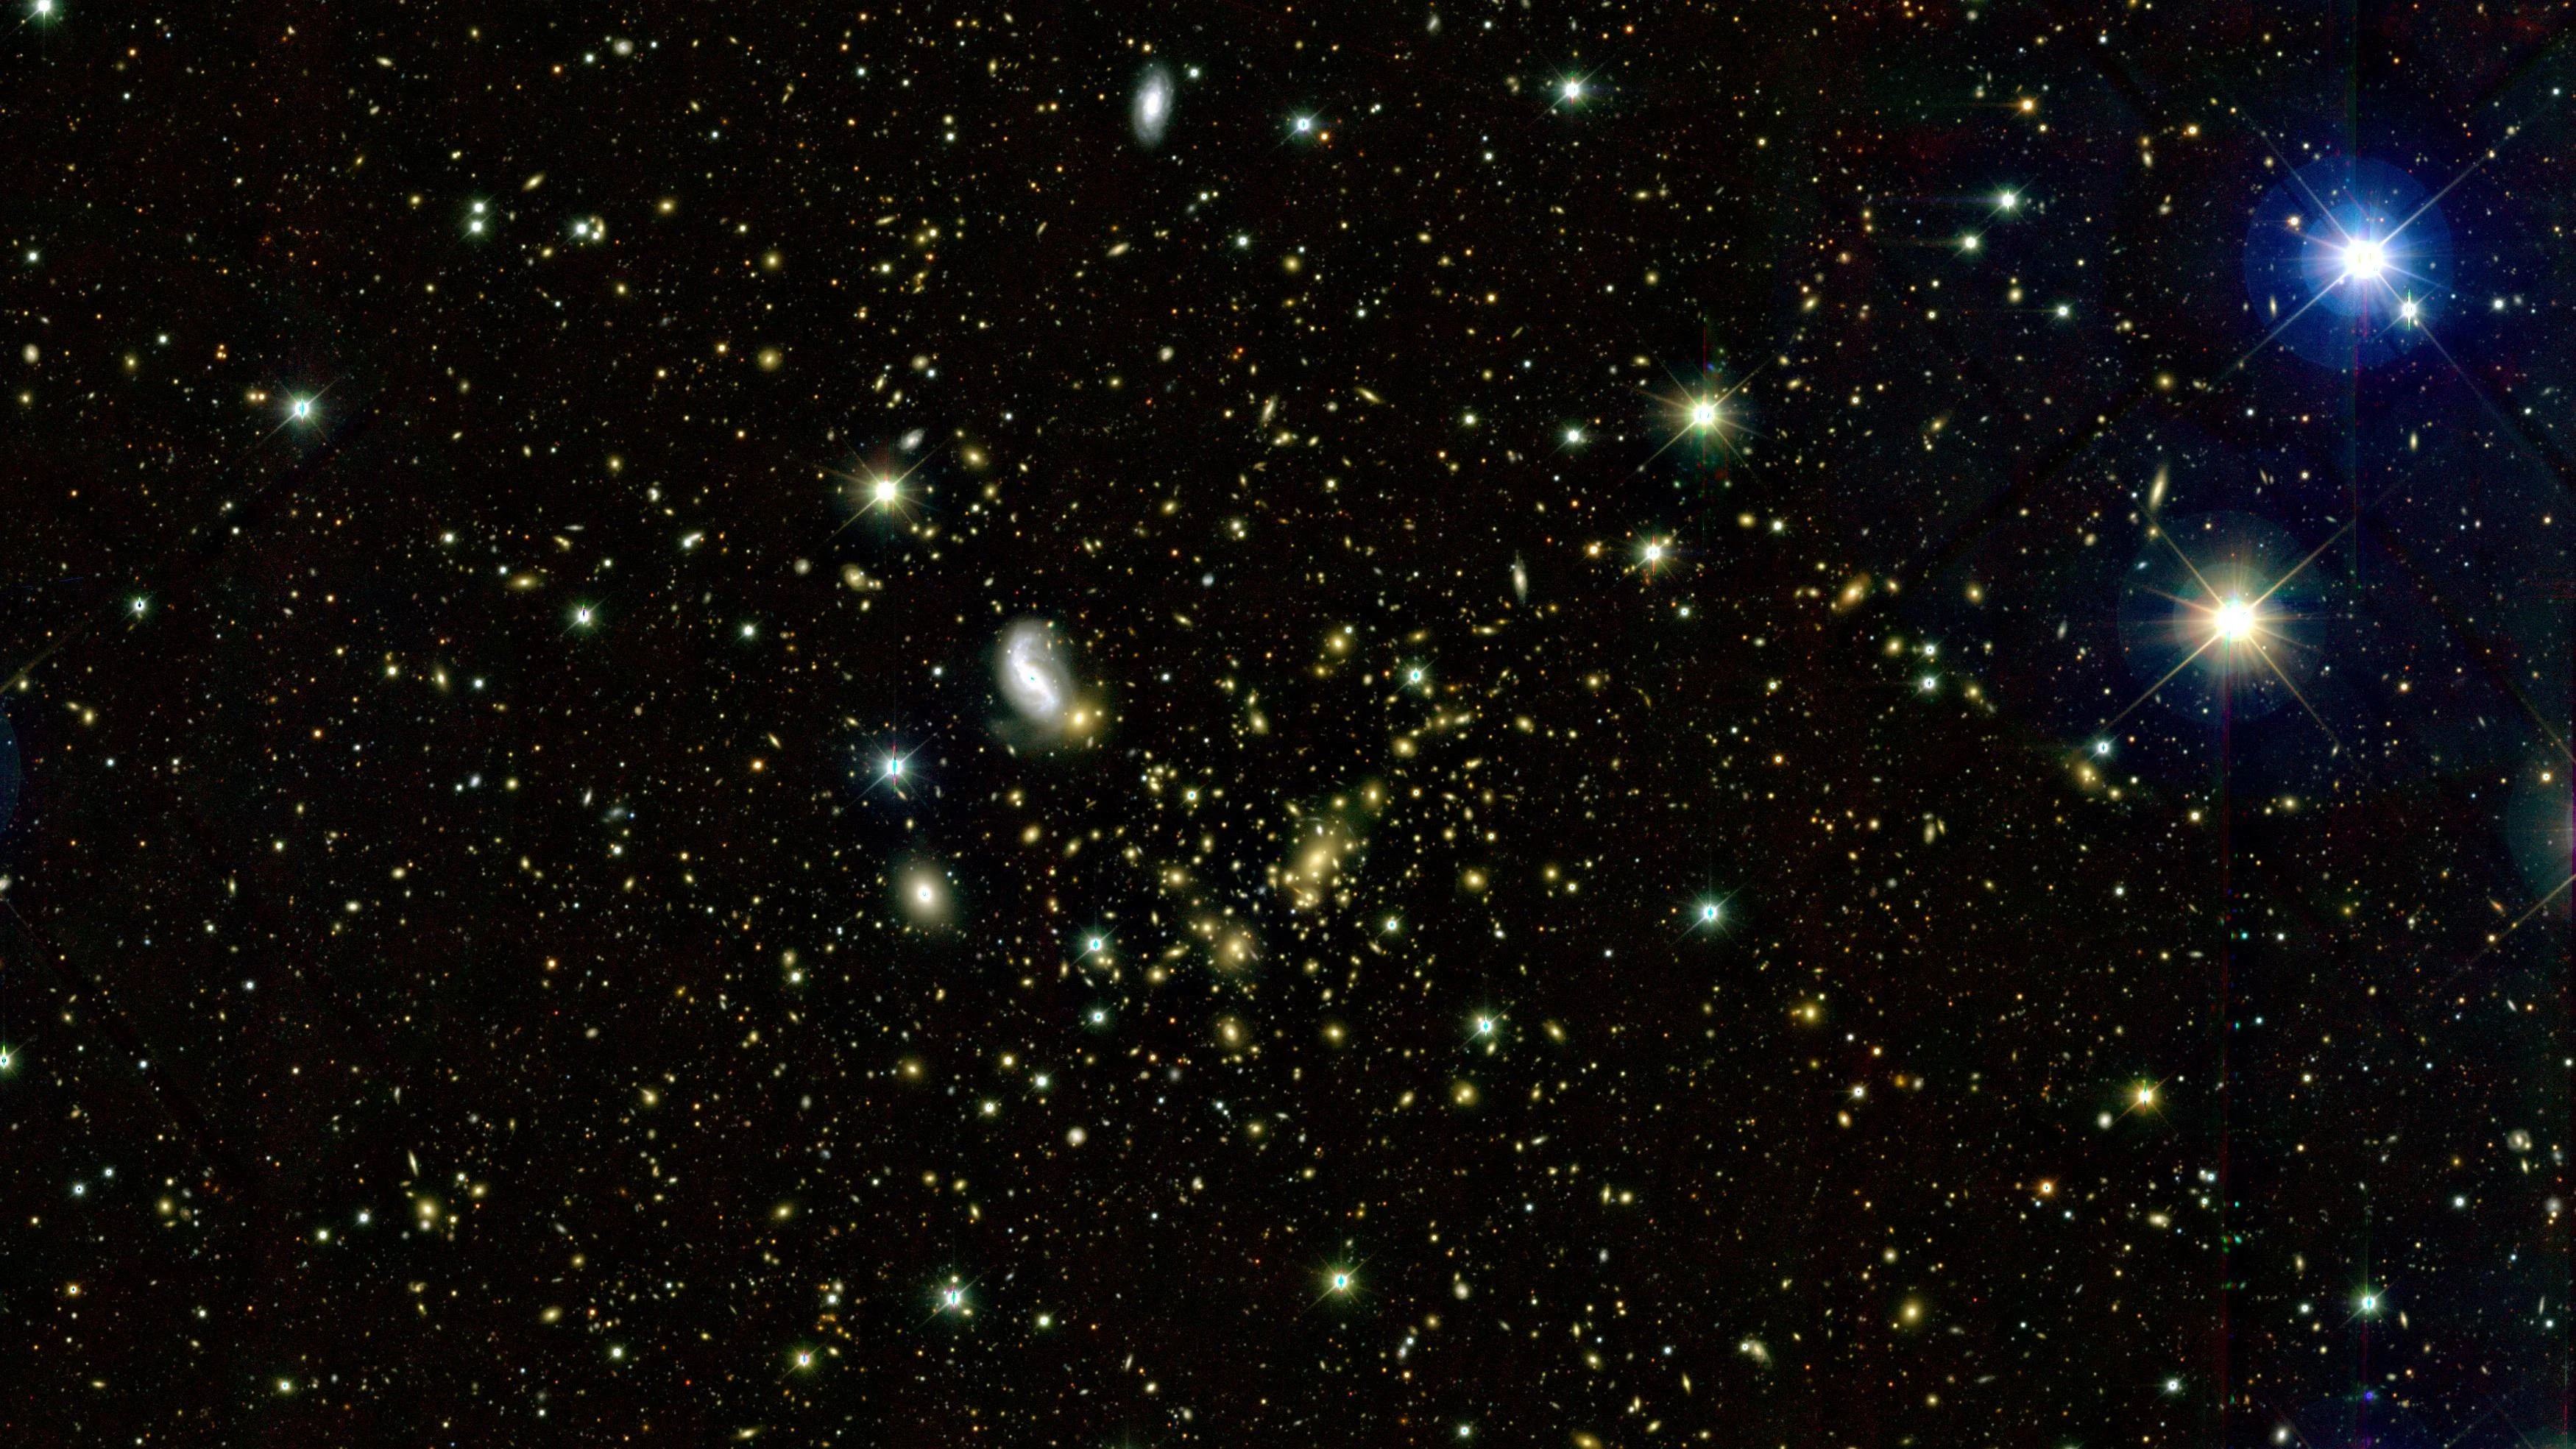 Hubble Ultra Deep Field Pictures 31 Pics | Wallpaperiz.